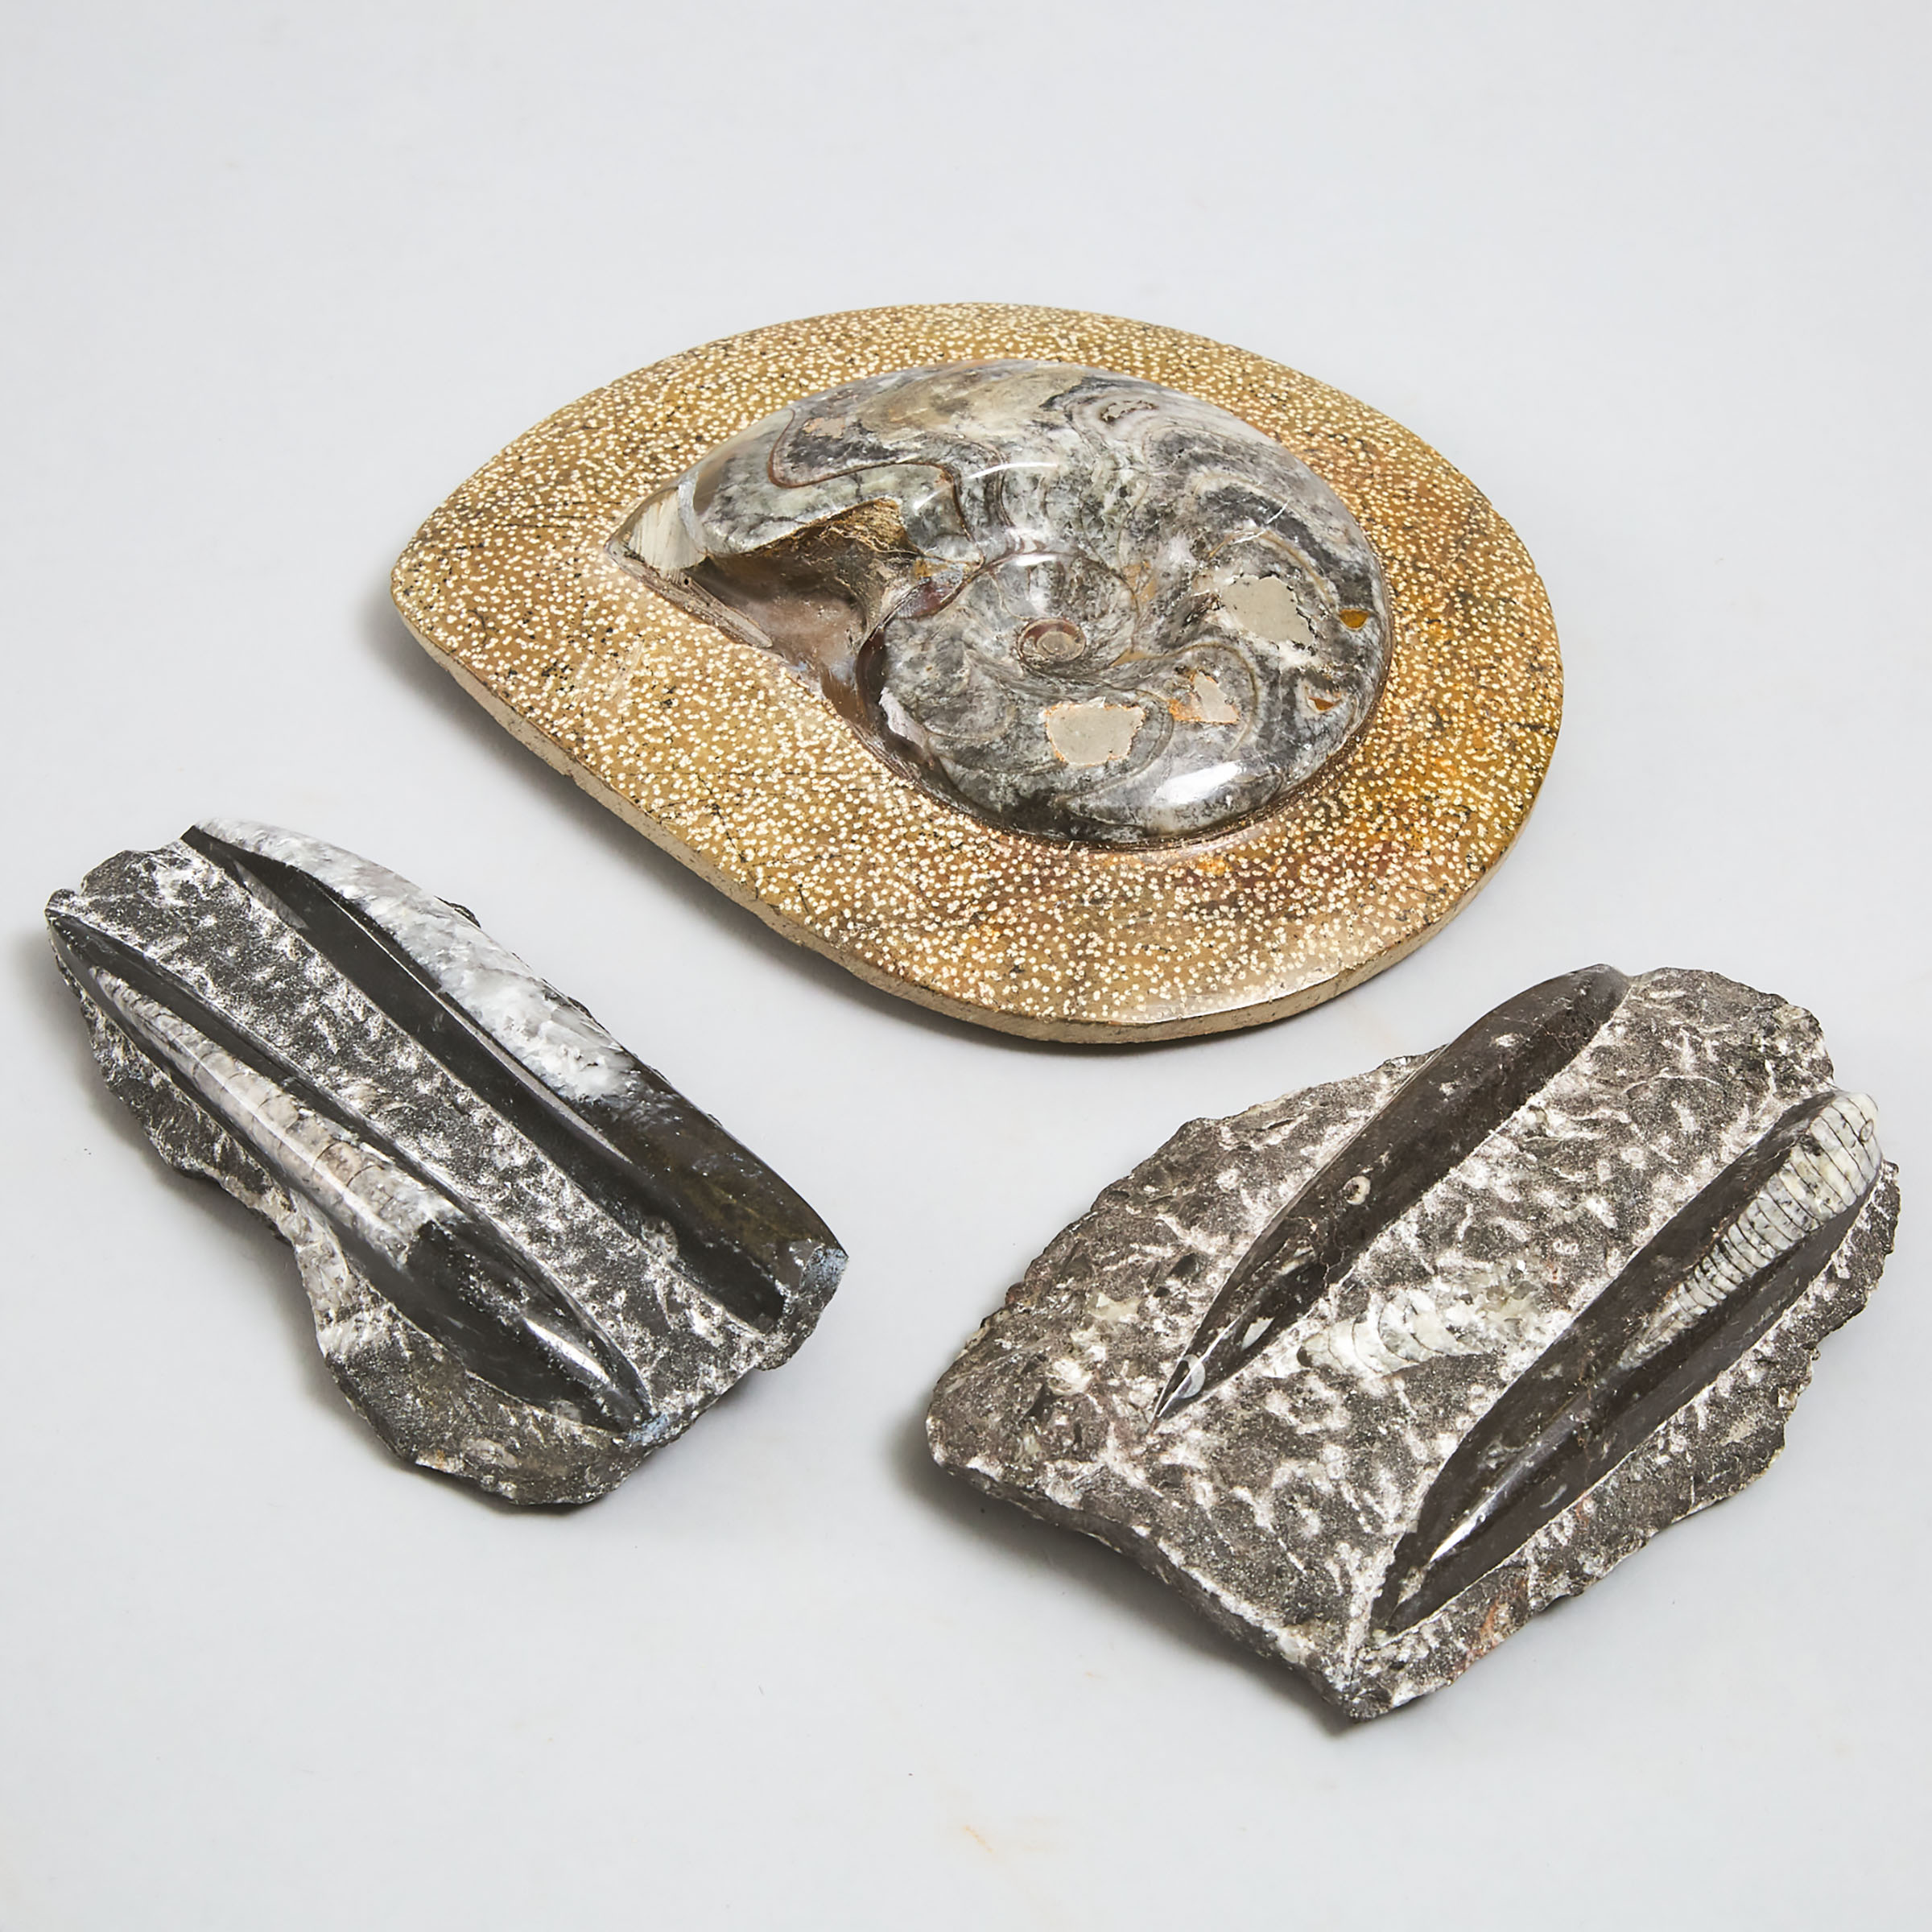 Group of Three Marine Fossils